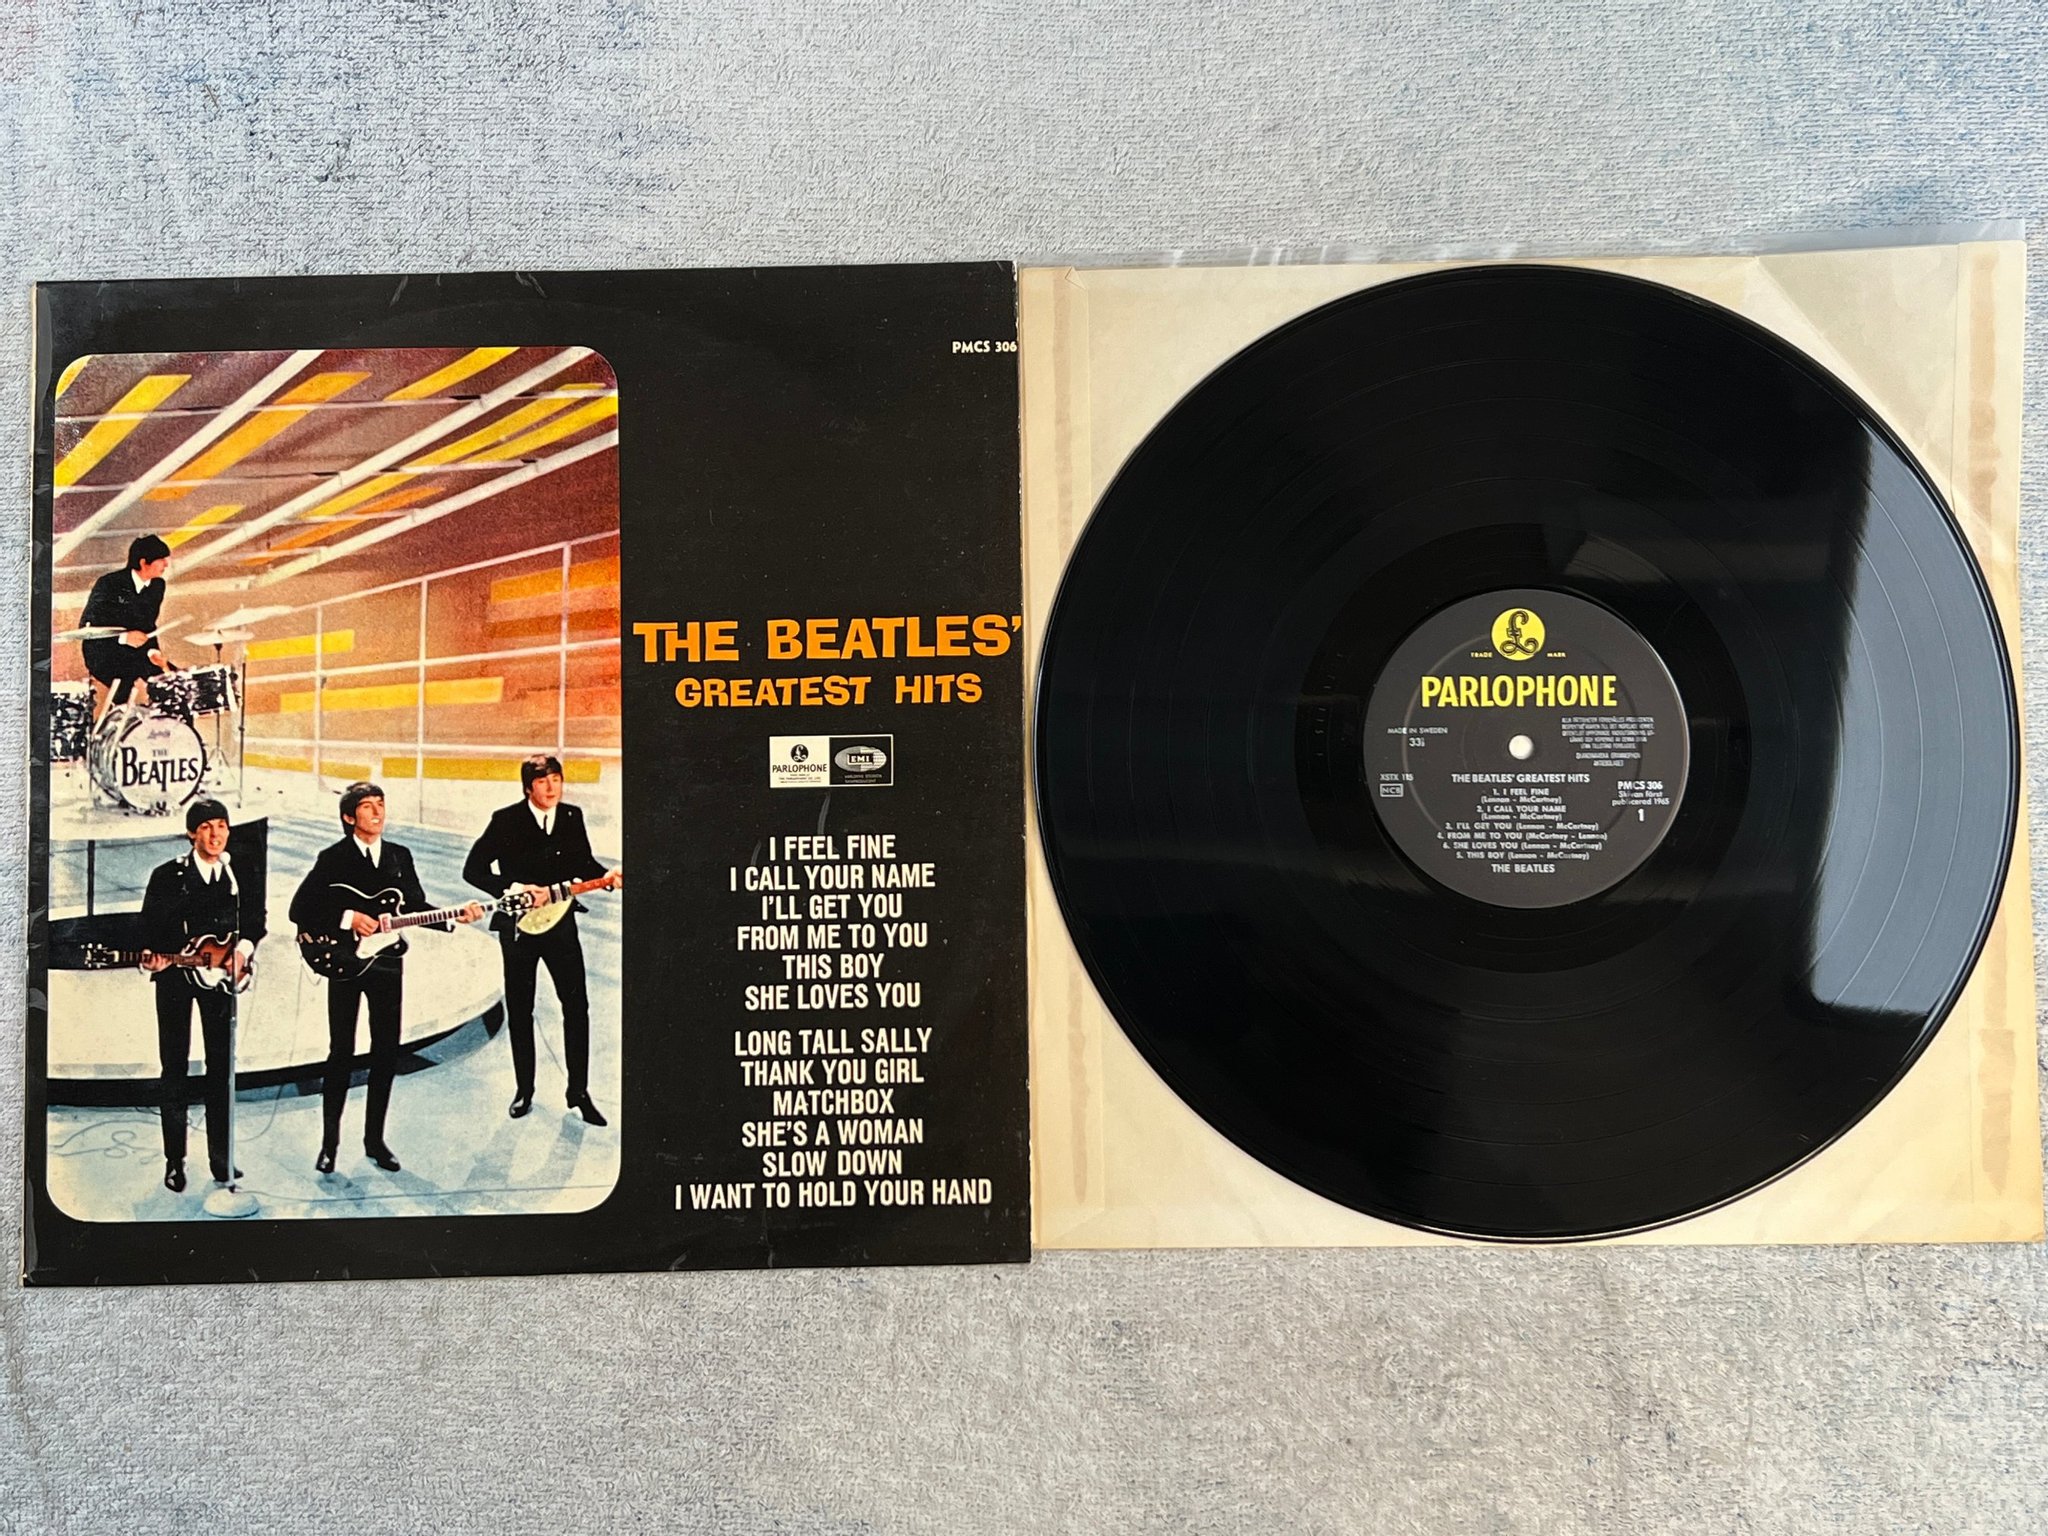 Omslagsbild för skivan THE BEATLES greatest hits LP -65 Swe PARLOPHONE PMCS 306 **rare**